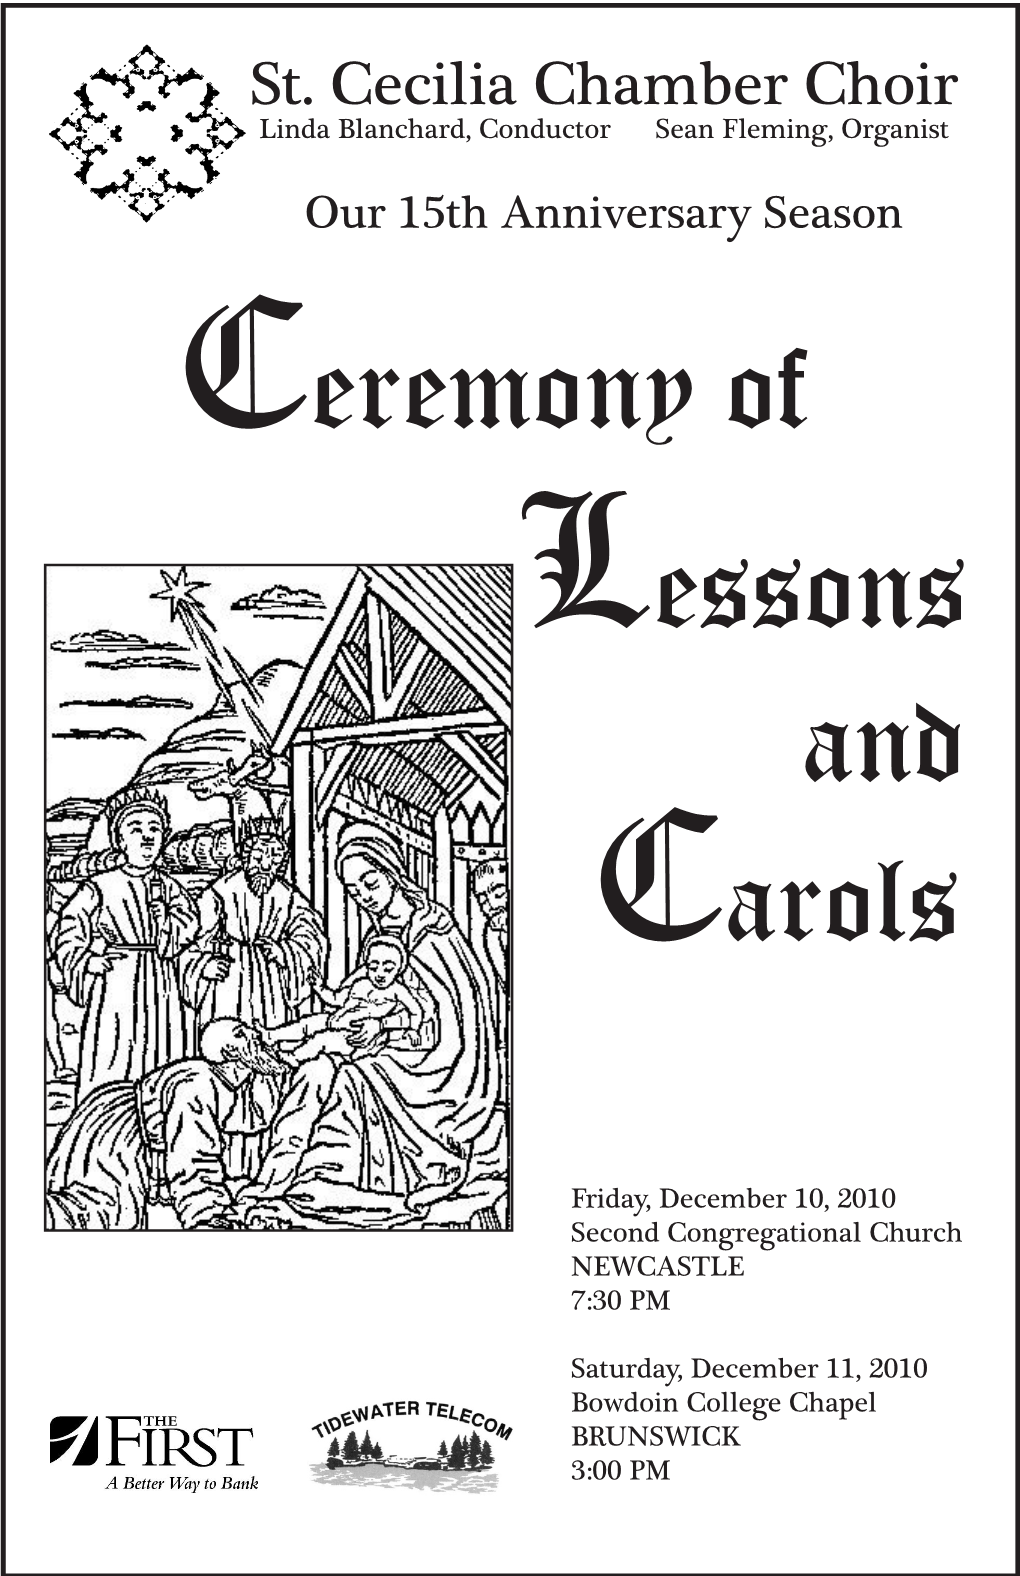 Ceremony of Carols Lessons